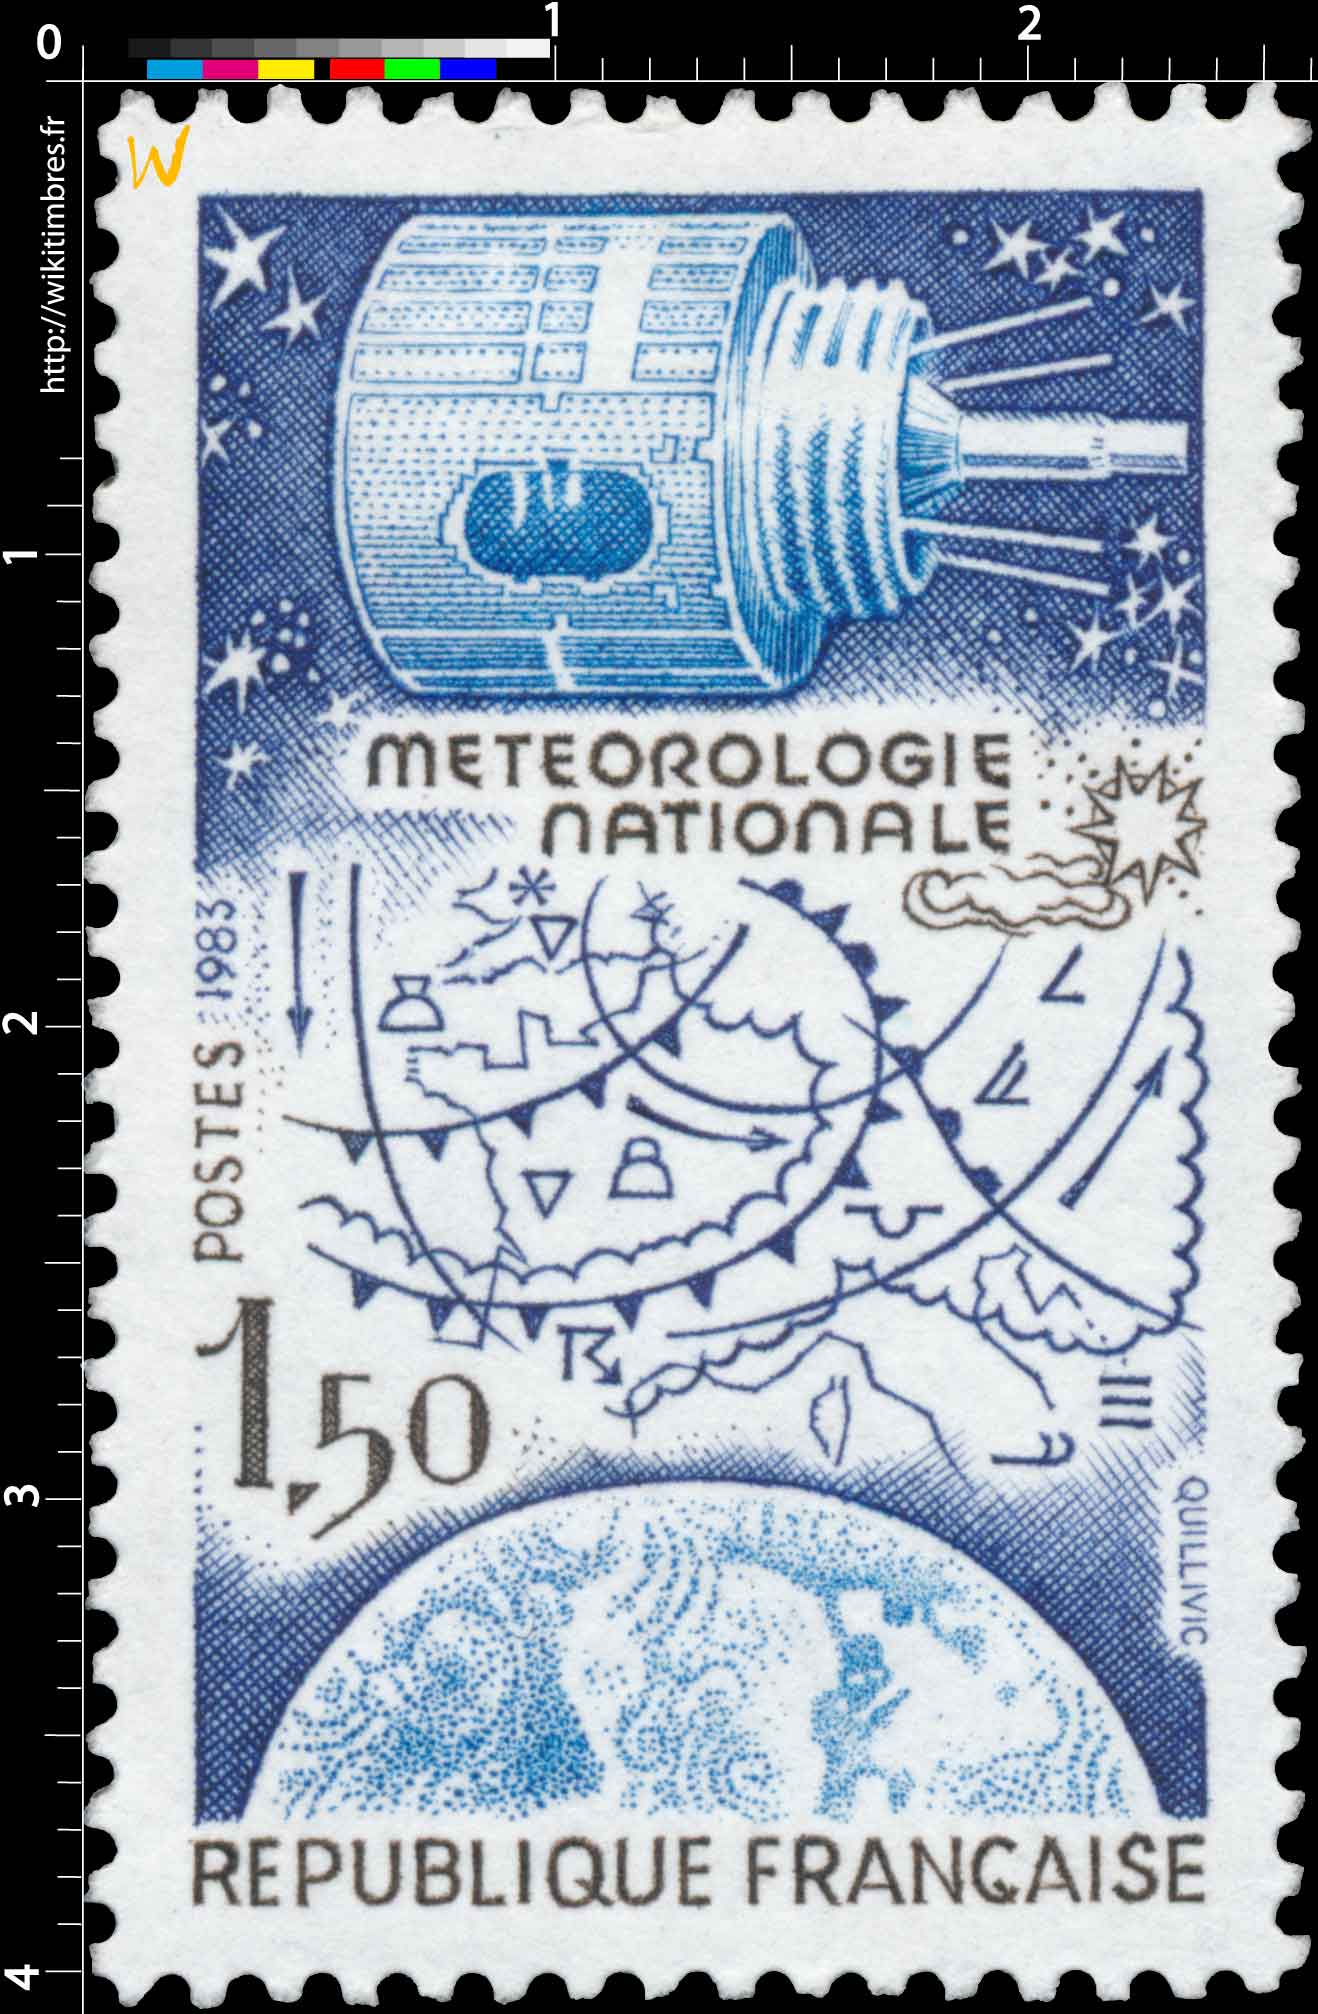 1983 MÉTÉOROLOGIE NATIONALE